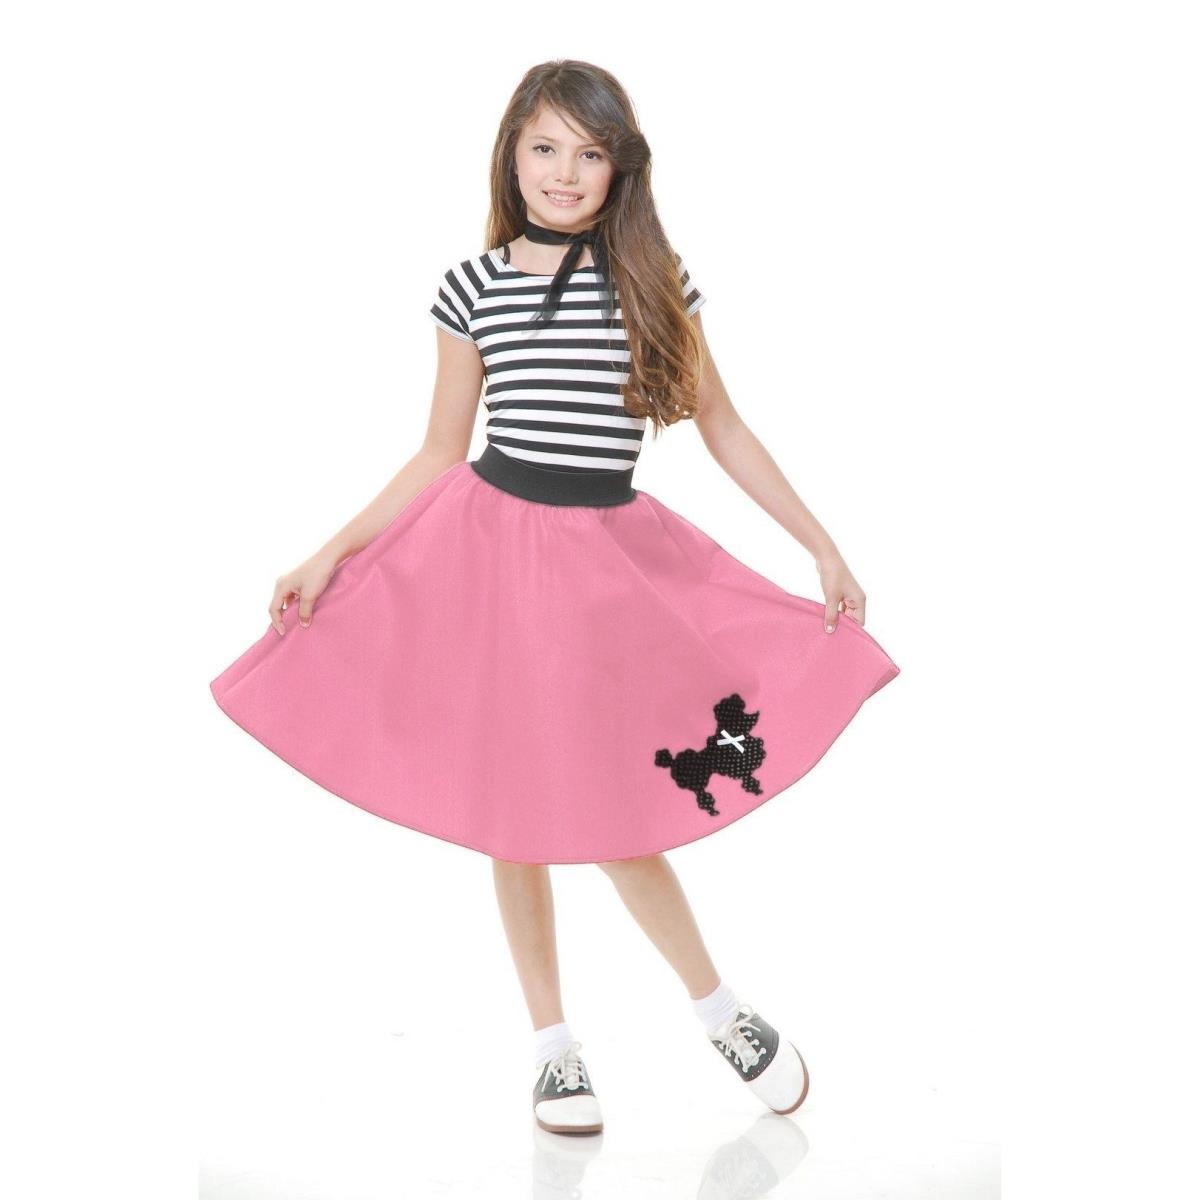 282128 Poodle Skirt Child Costume, Pink - Large